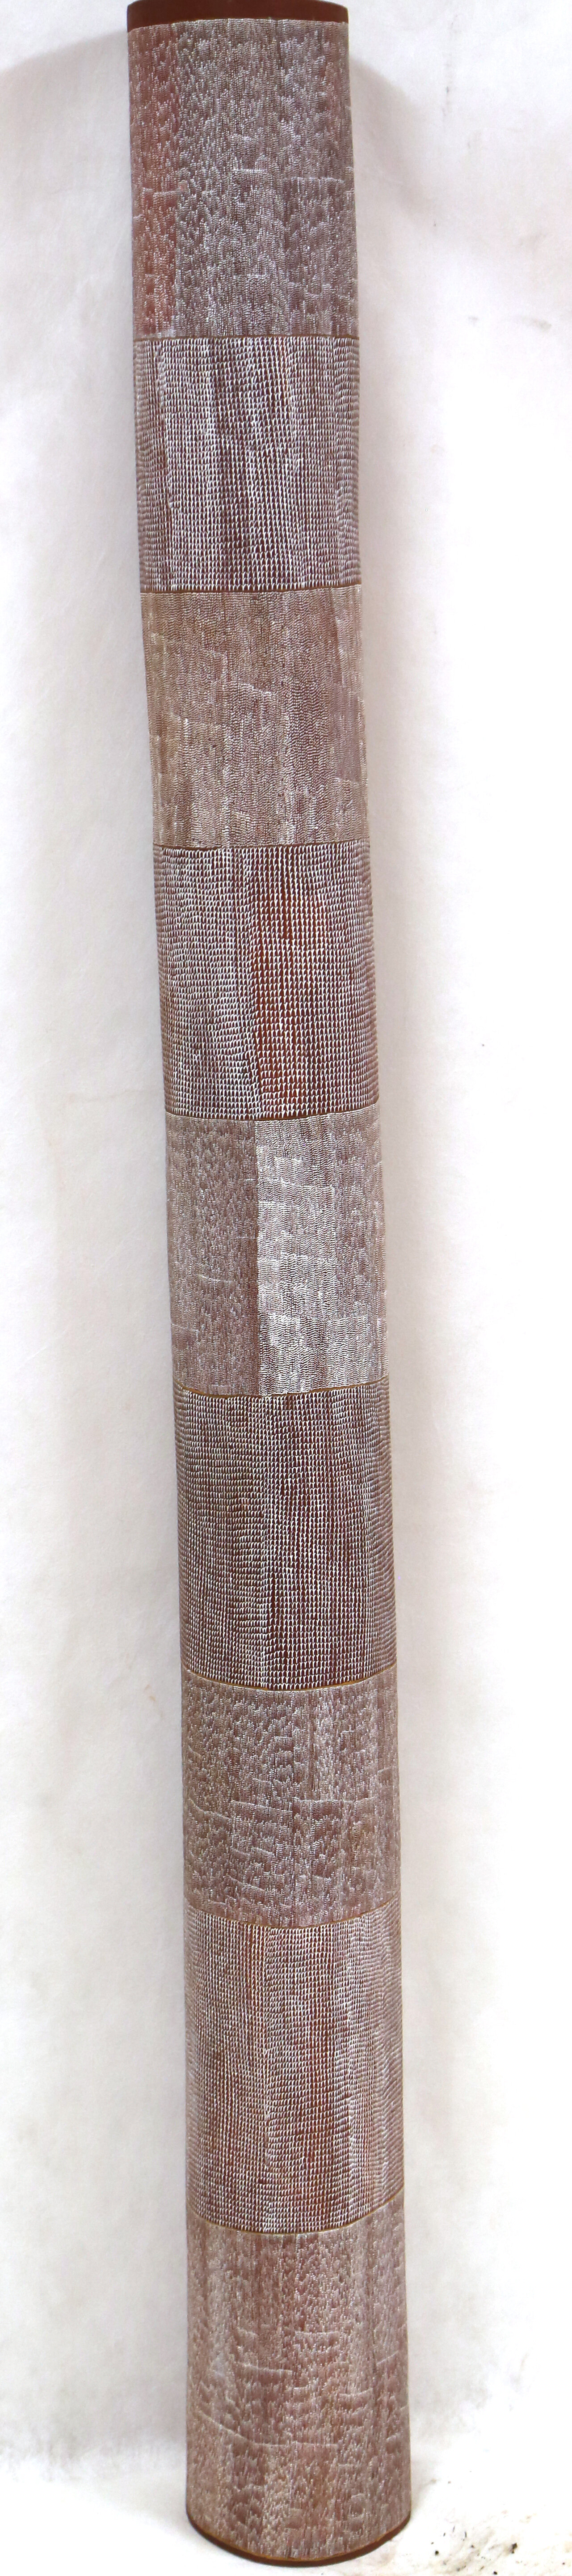  Owen Yalandja Ngalkodjek Yawkyawk (Lorrkon) Natural pigment on carved ironwood 192 x 16 x 16cm Maningrida Catalog #2868-18  SOLD  